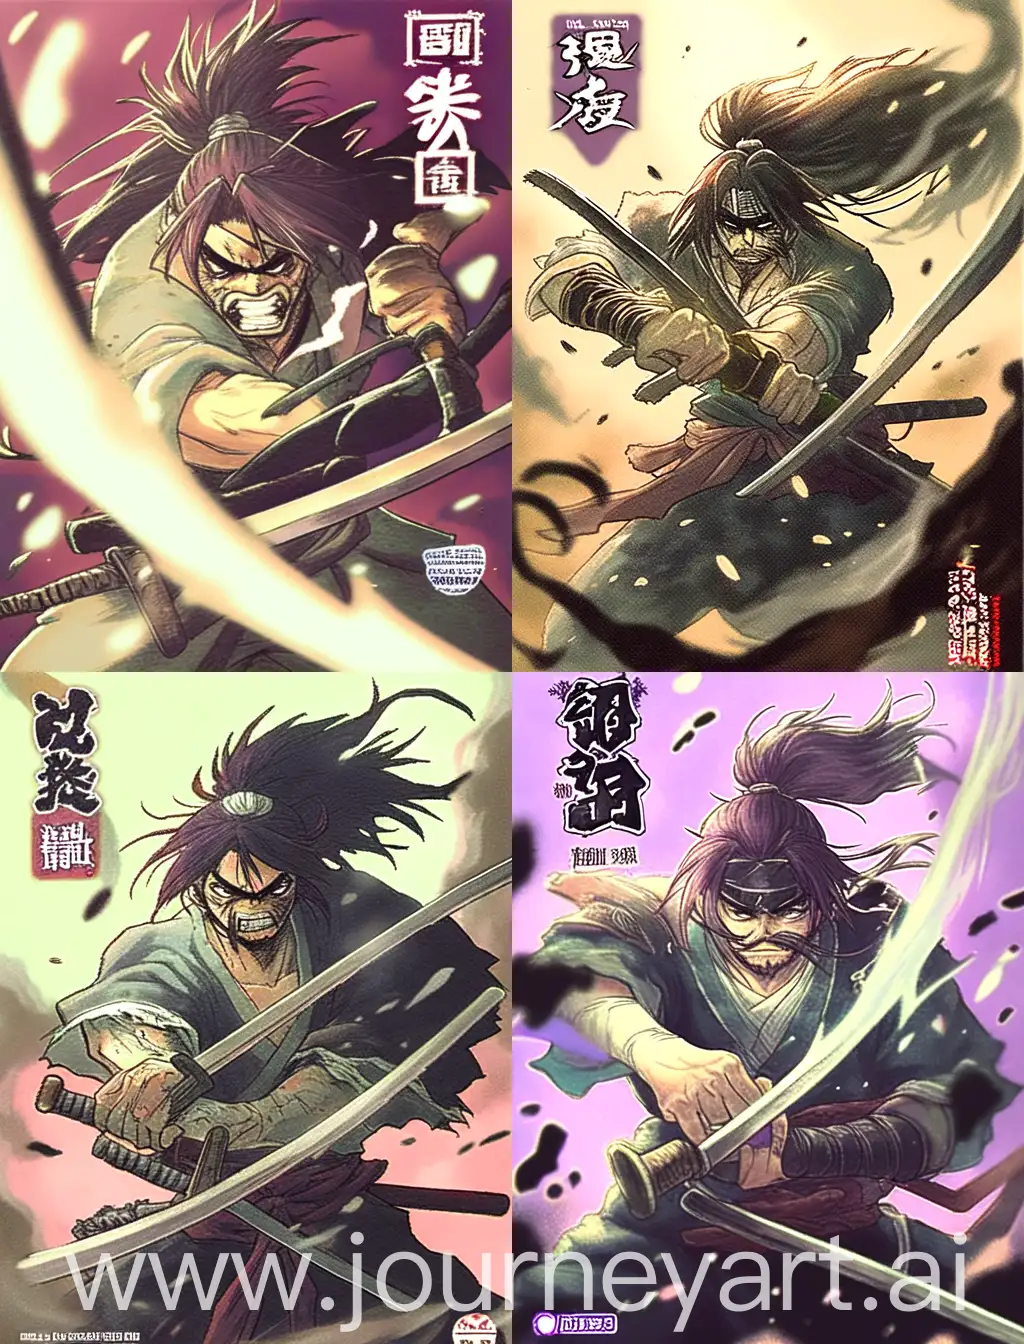 Fierce-Samurai-Warrior-in-Edo-Period-Attire